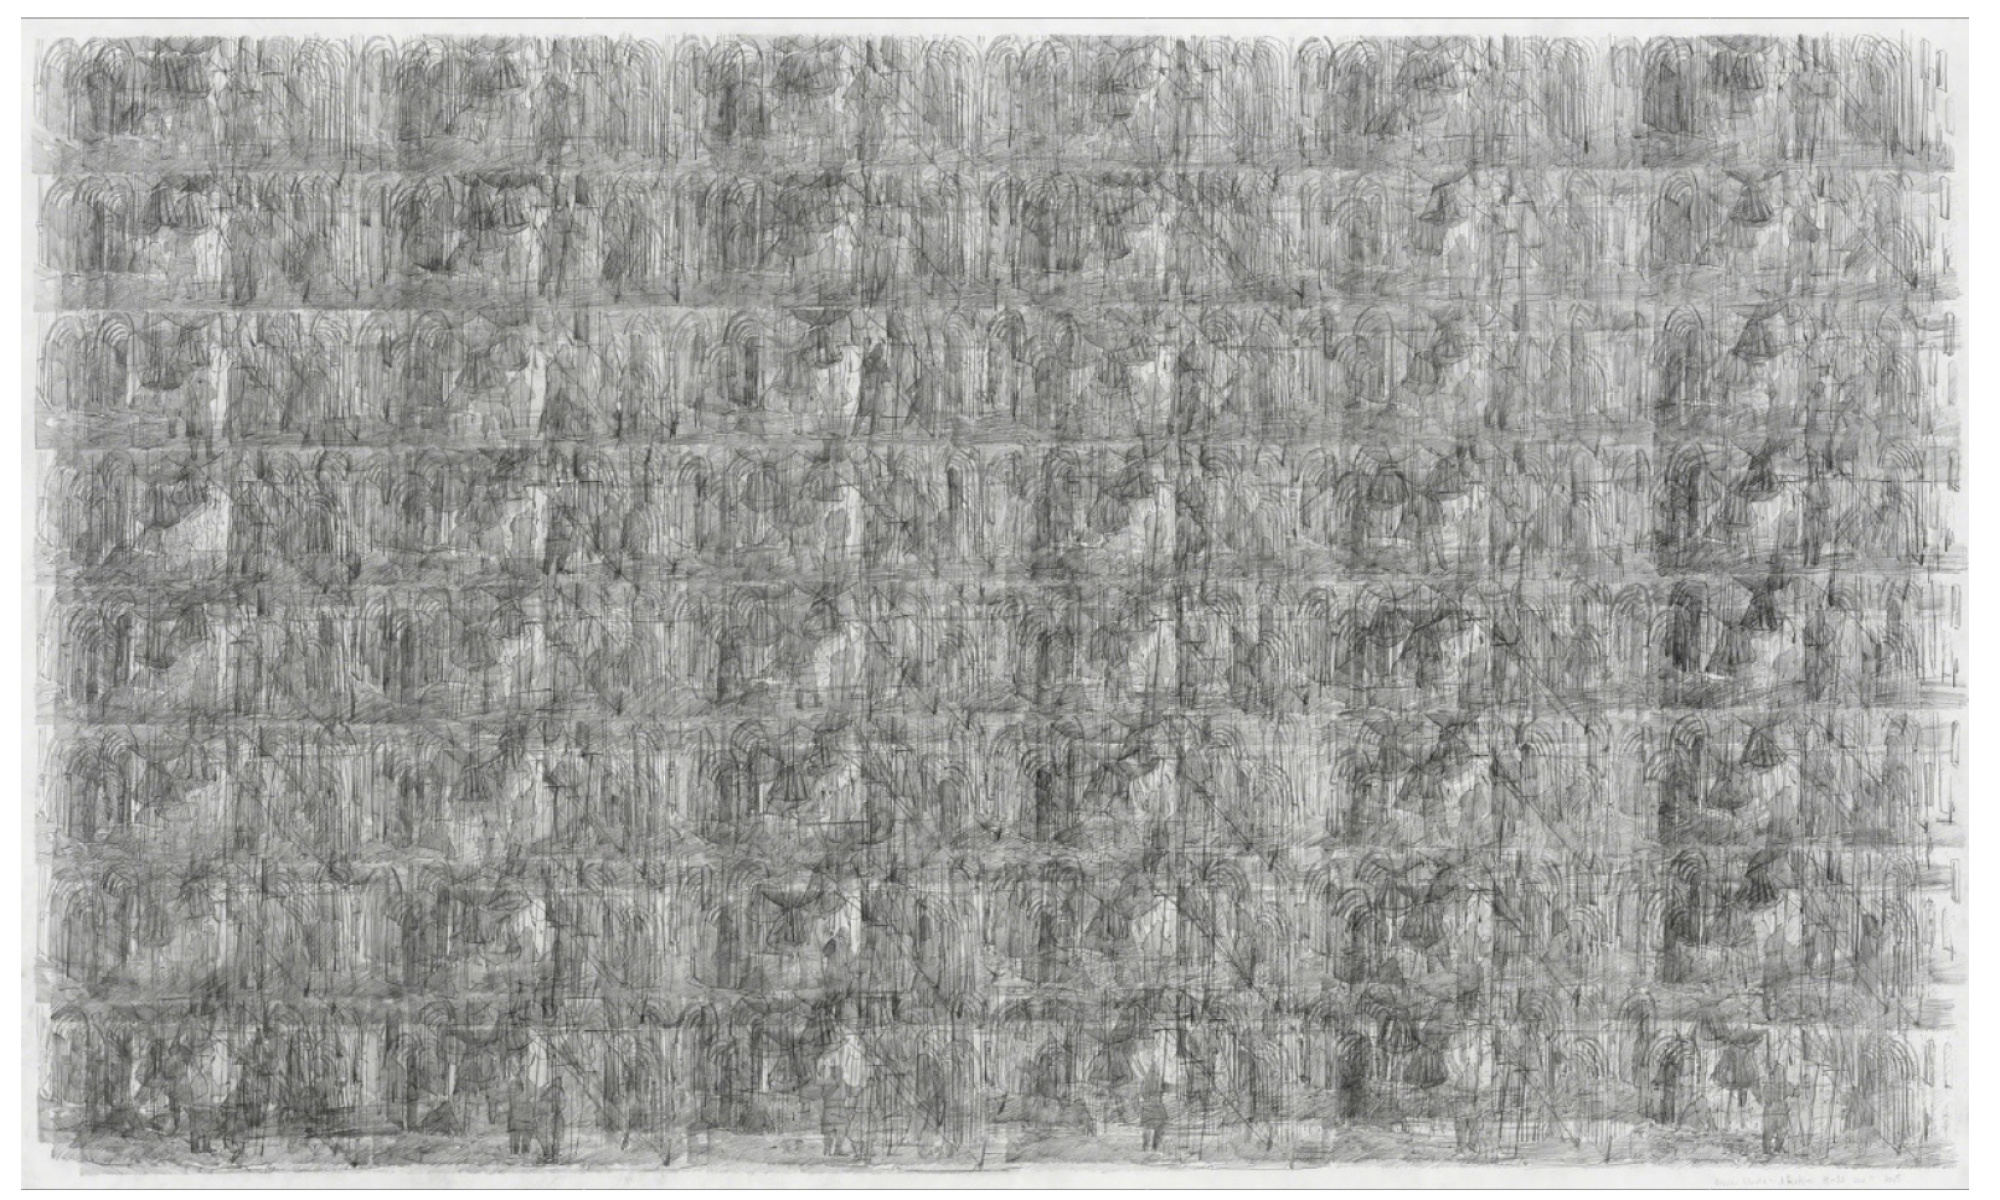 Ciprian Muresan - Andrei Rublev by Tarkovsky sec. 21-30